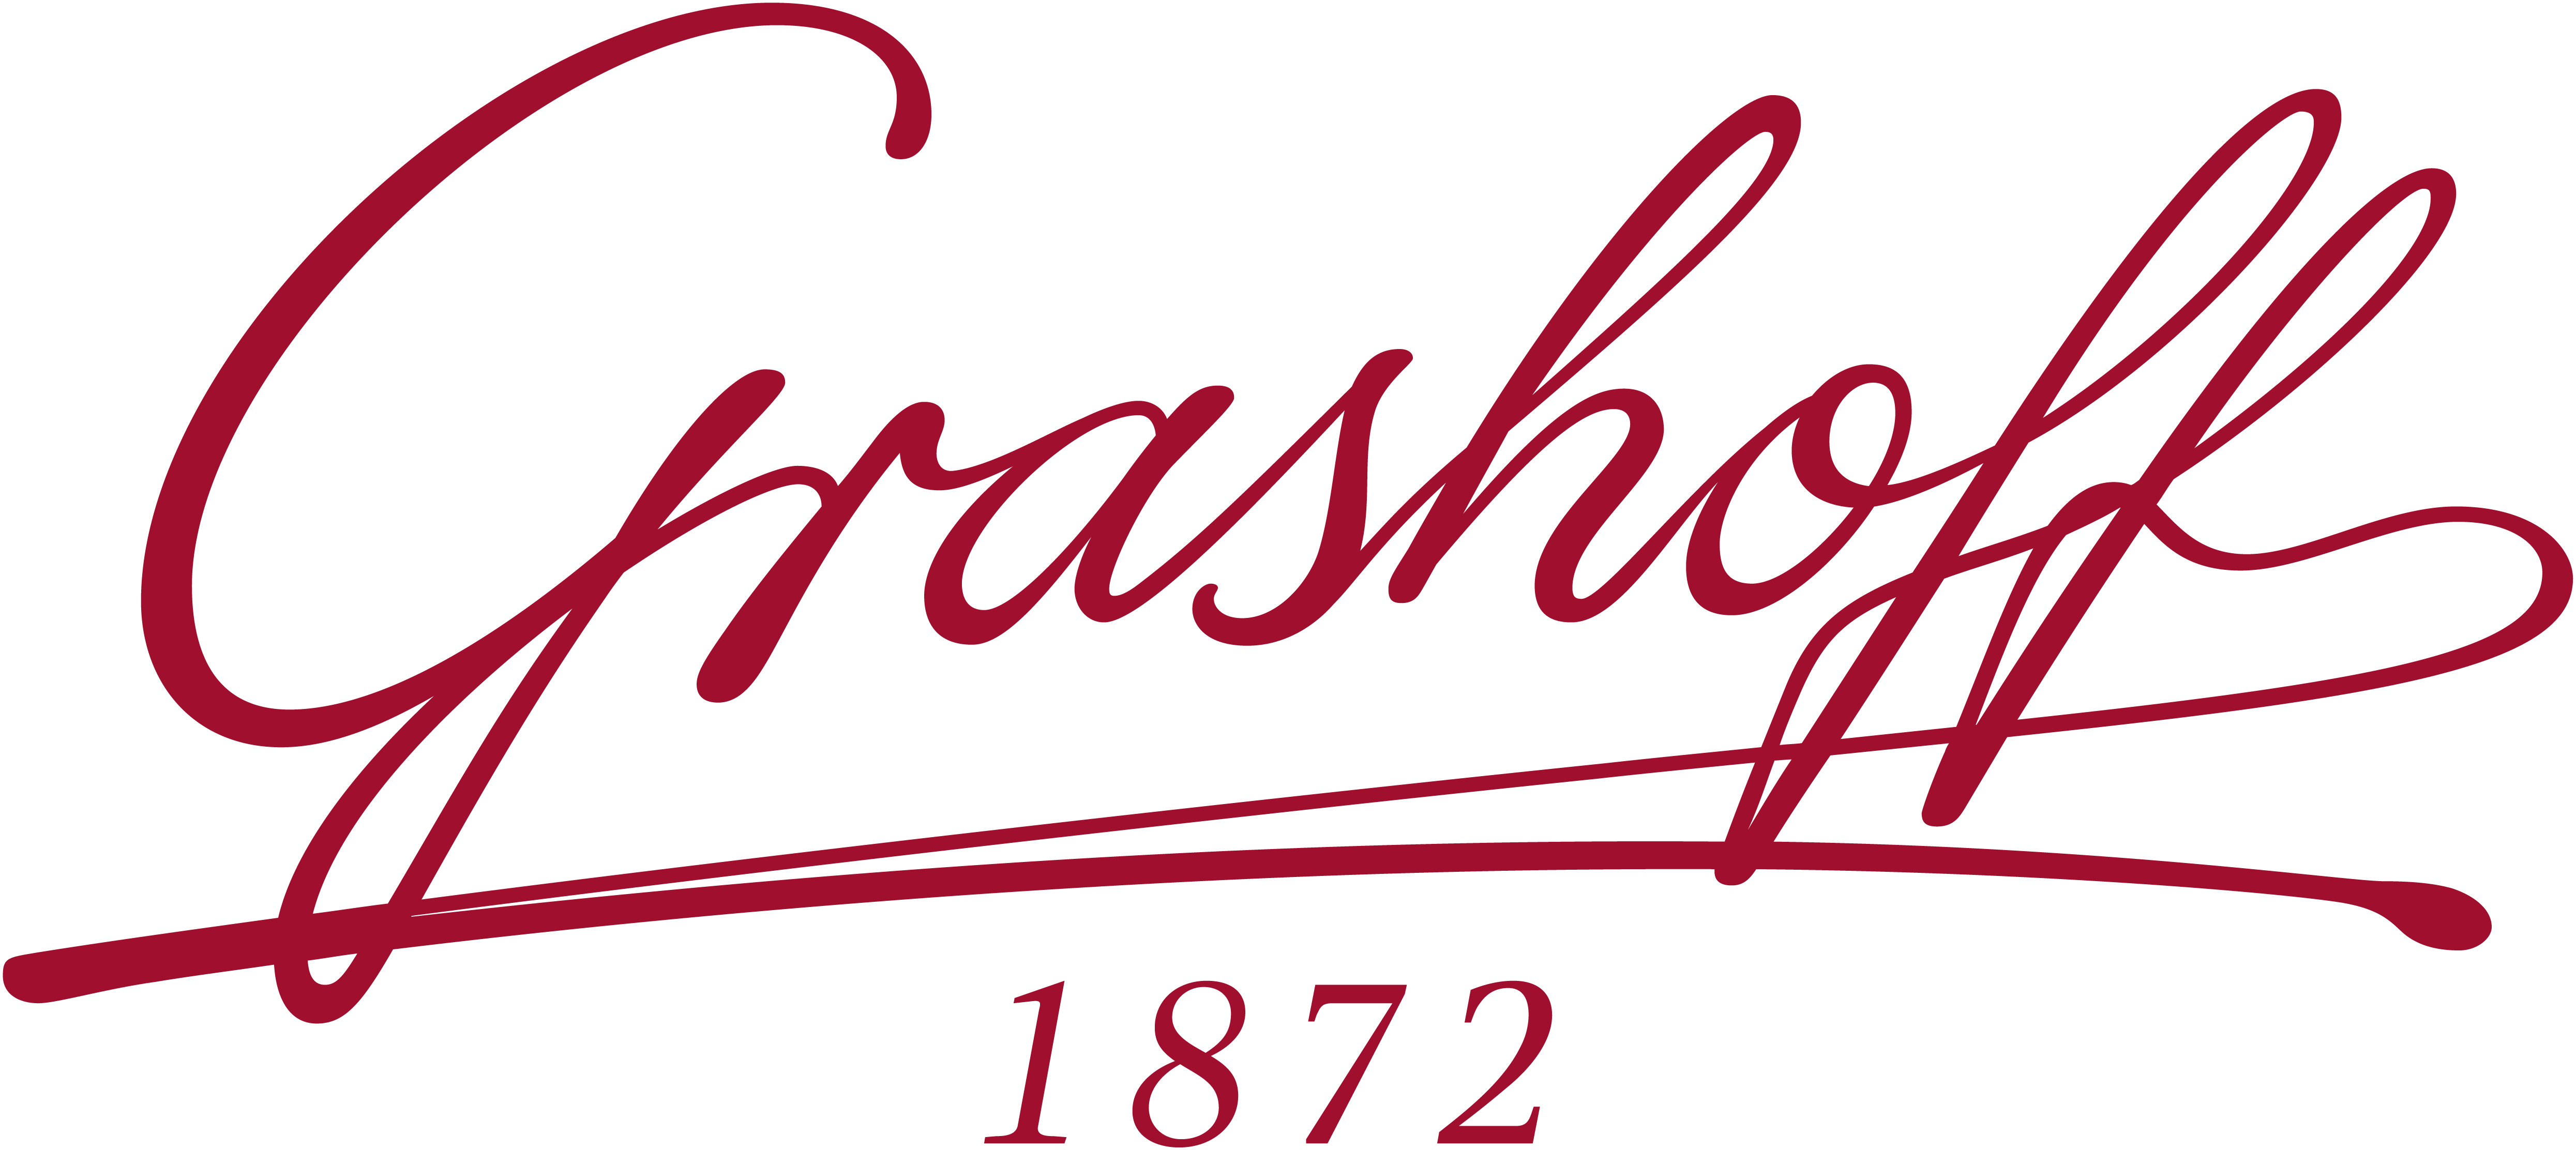 Grashoff